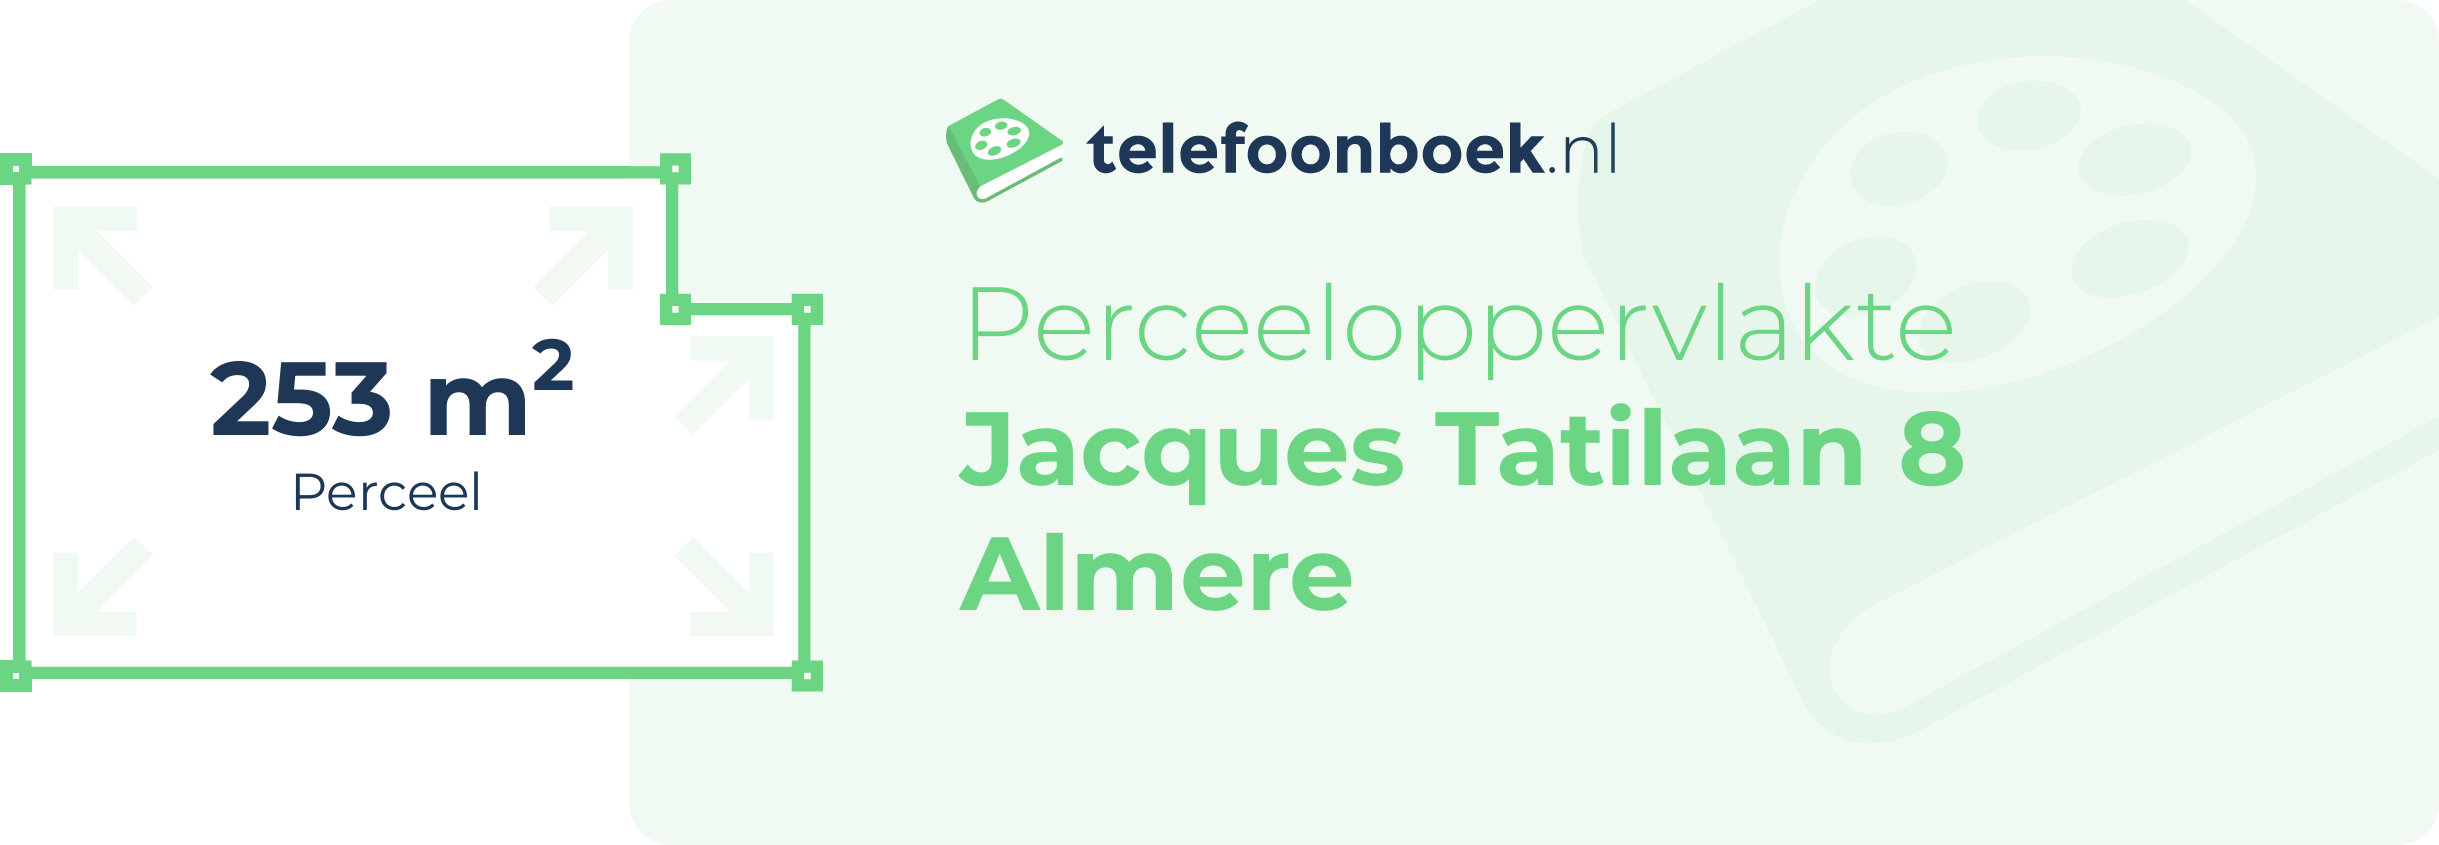 Perceeloppervlakte Jacques Tatilaan 8 Almere